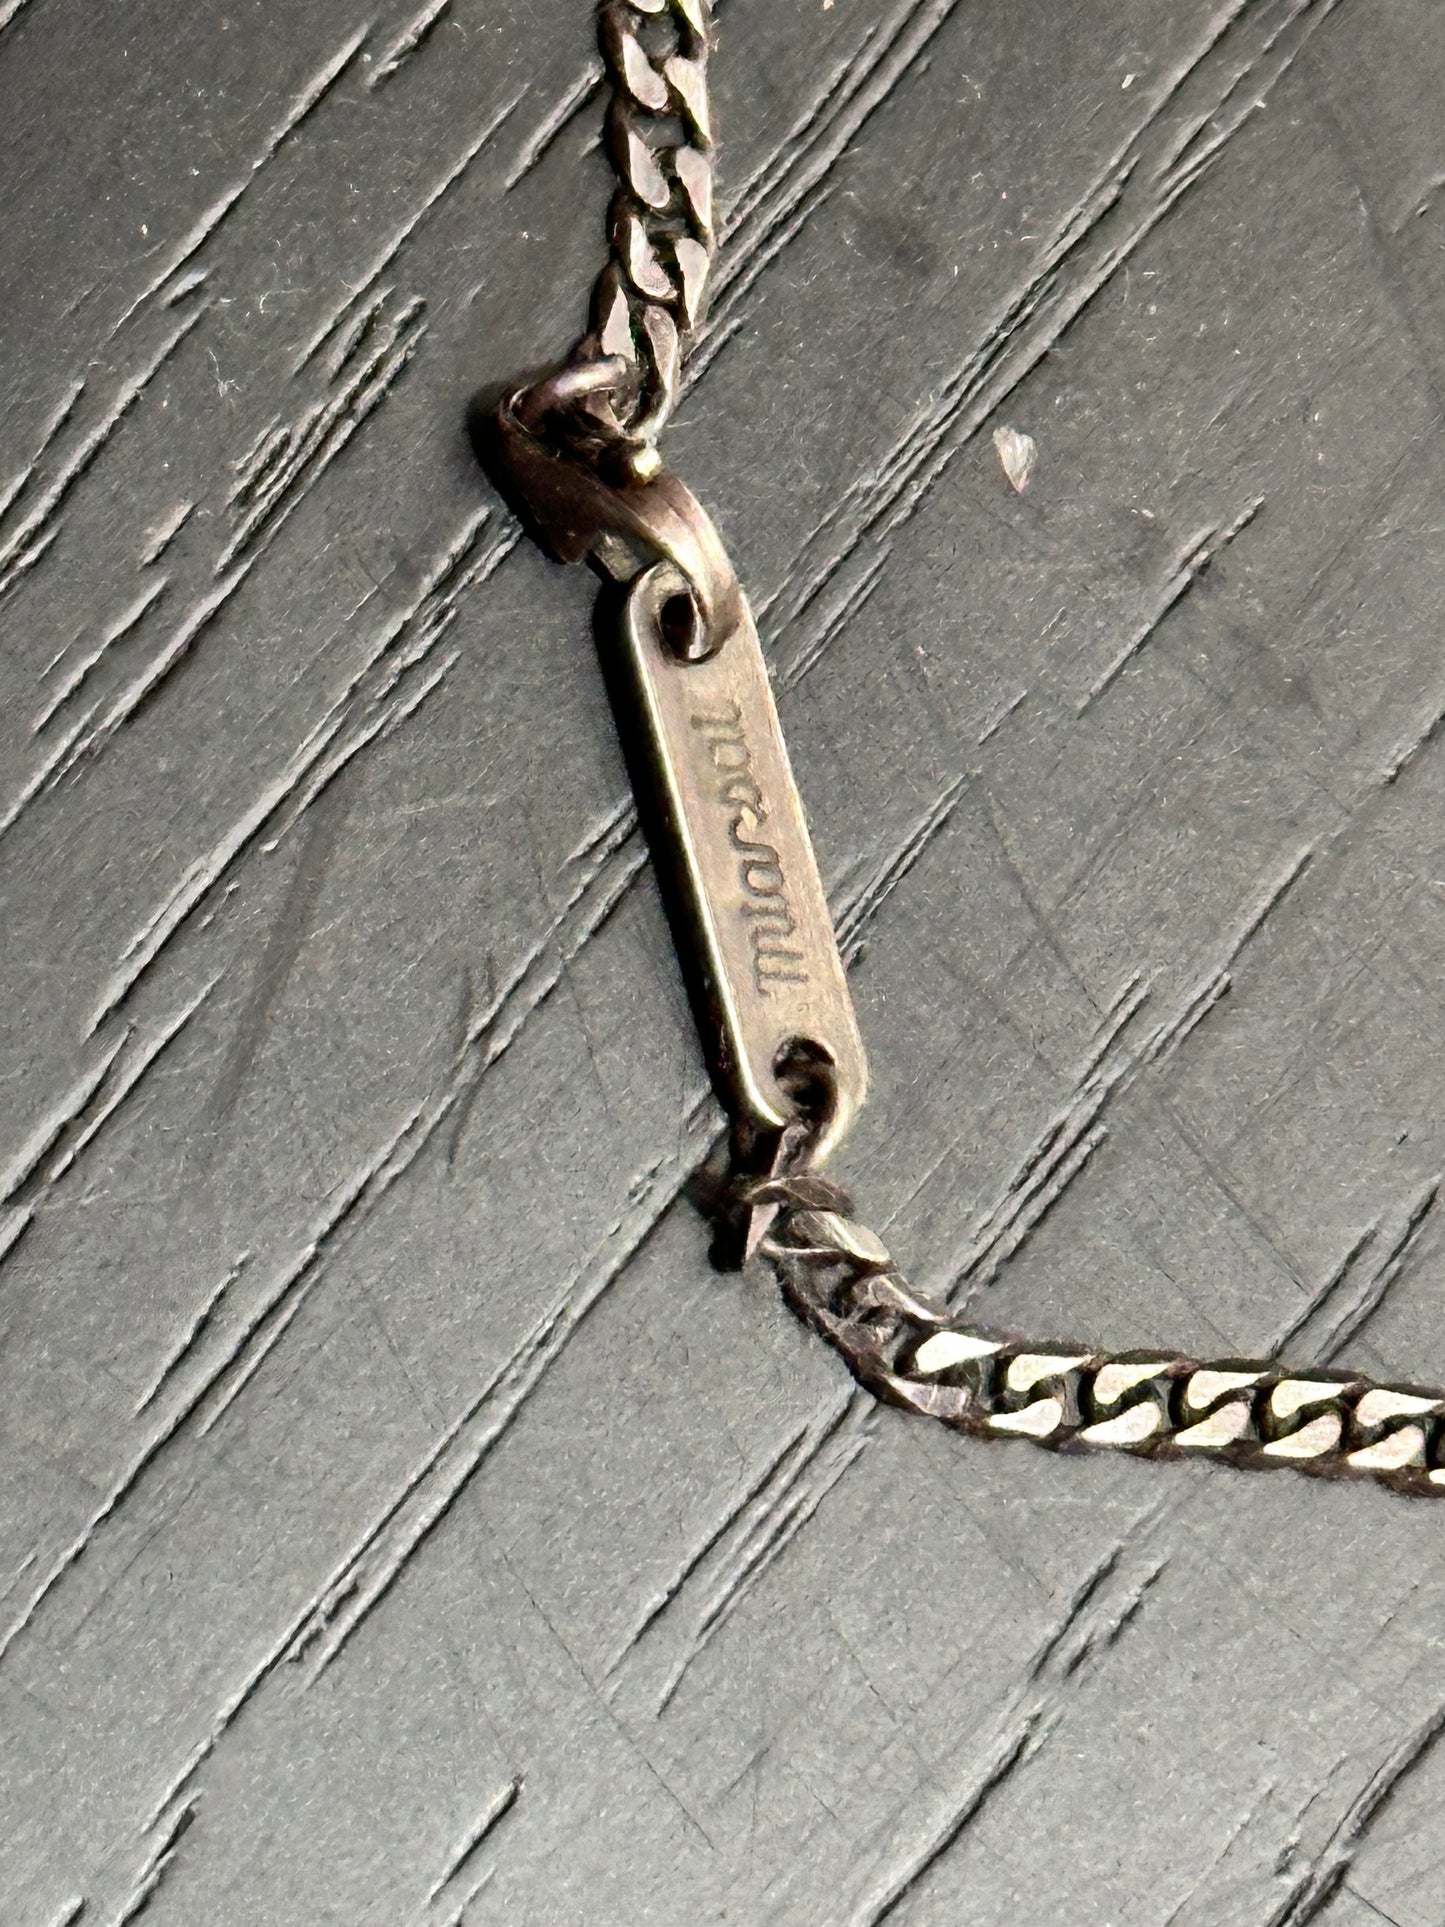 WRATH OF MAN: “H” Miansai 925 3mm Cuban Chain Necklace